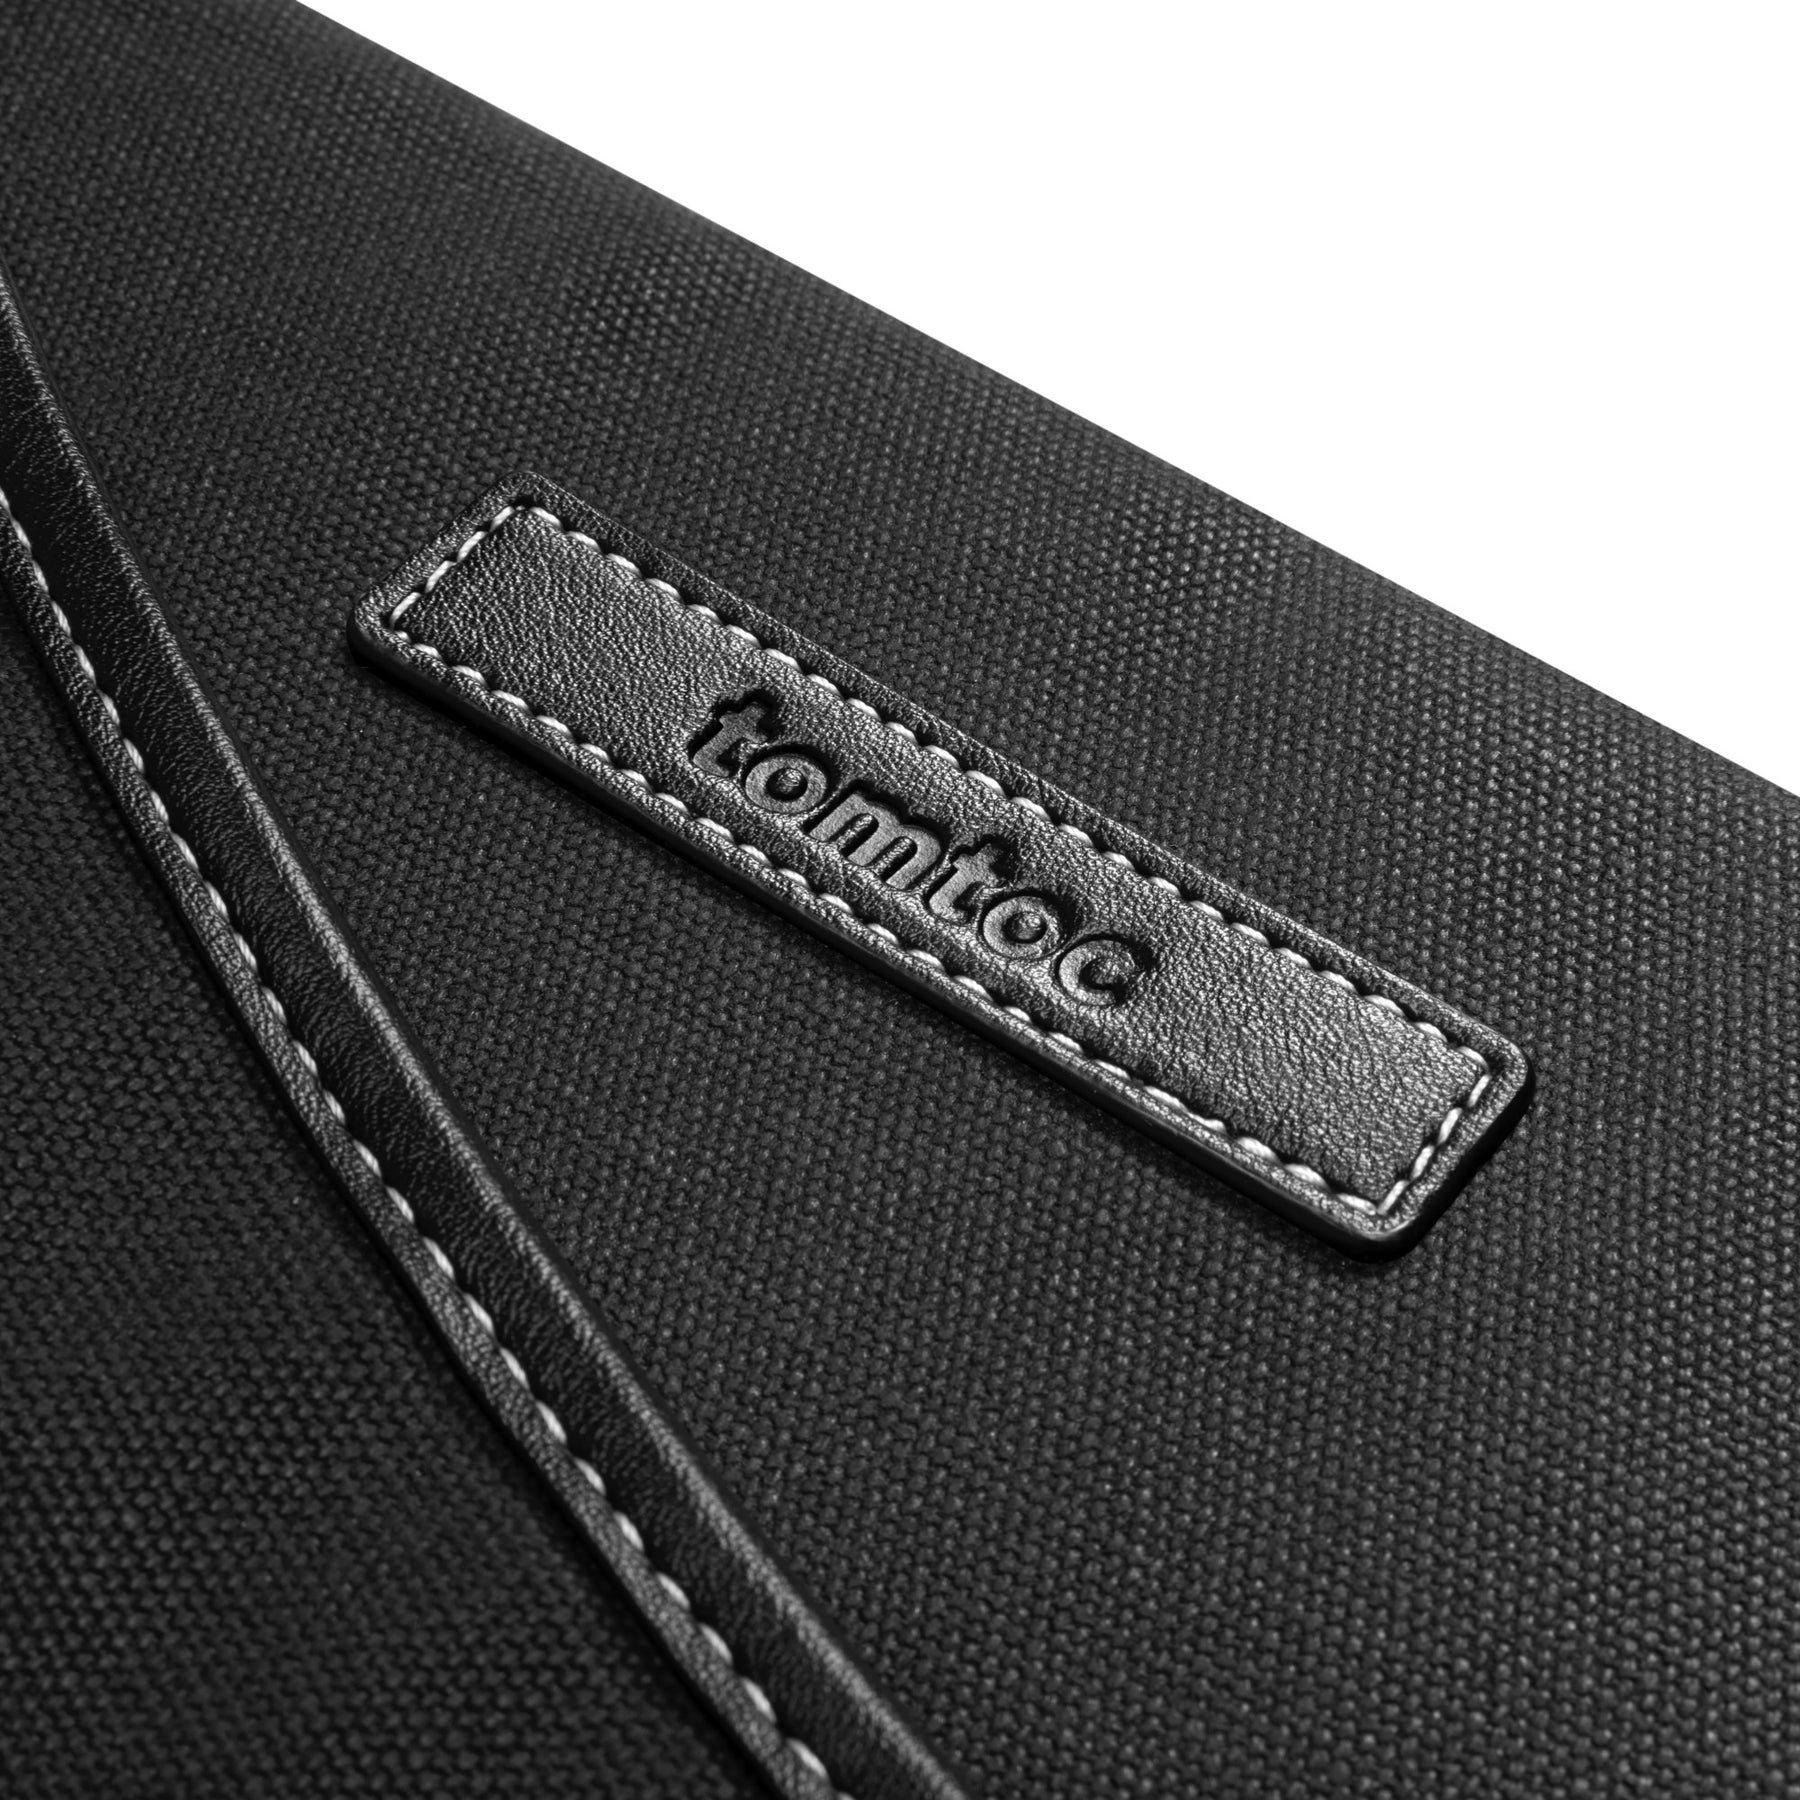 Versatile-T28 Laptop Tote Bag with Attachable Laptop Sleeve 18L